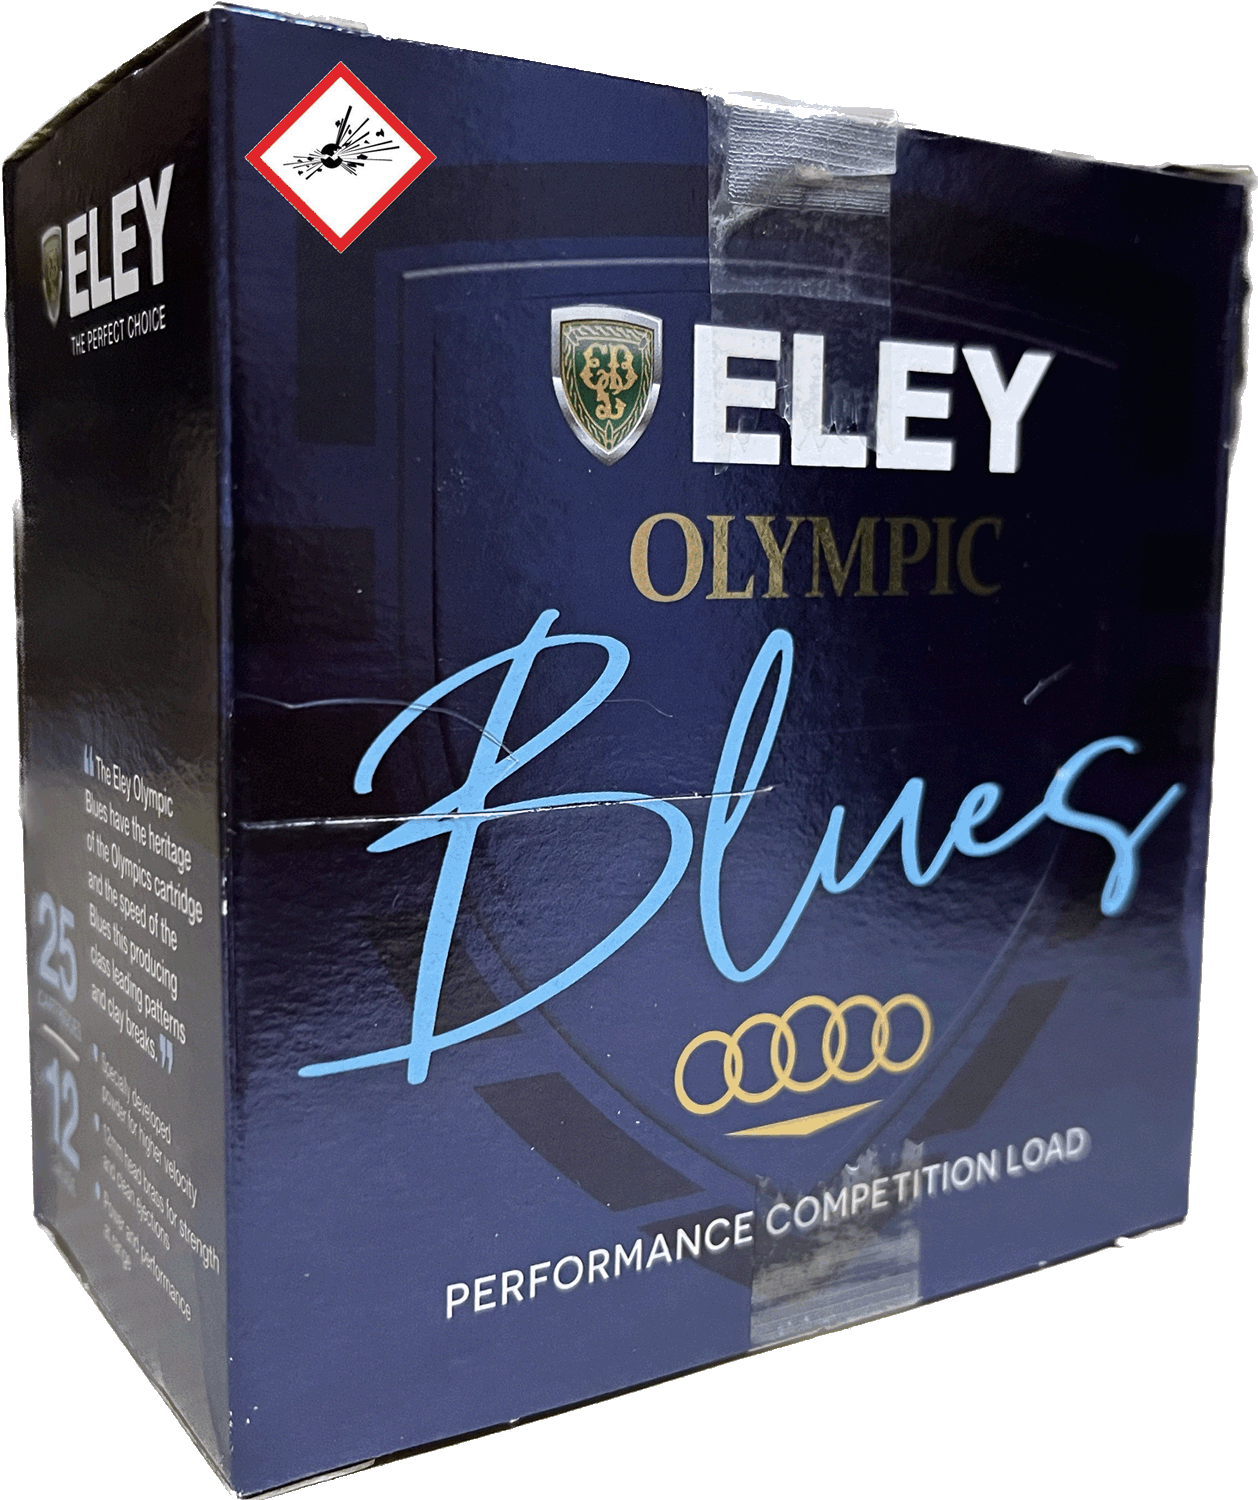 203899_eley-olympic-blues-12-70